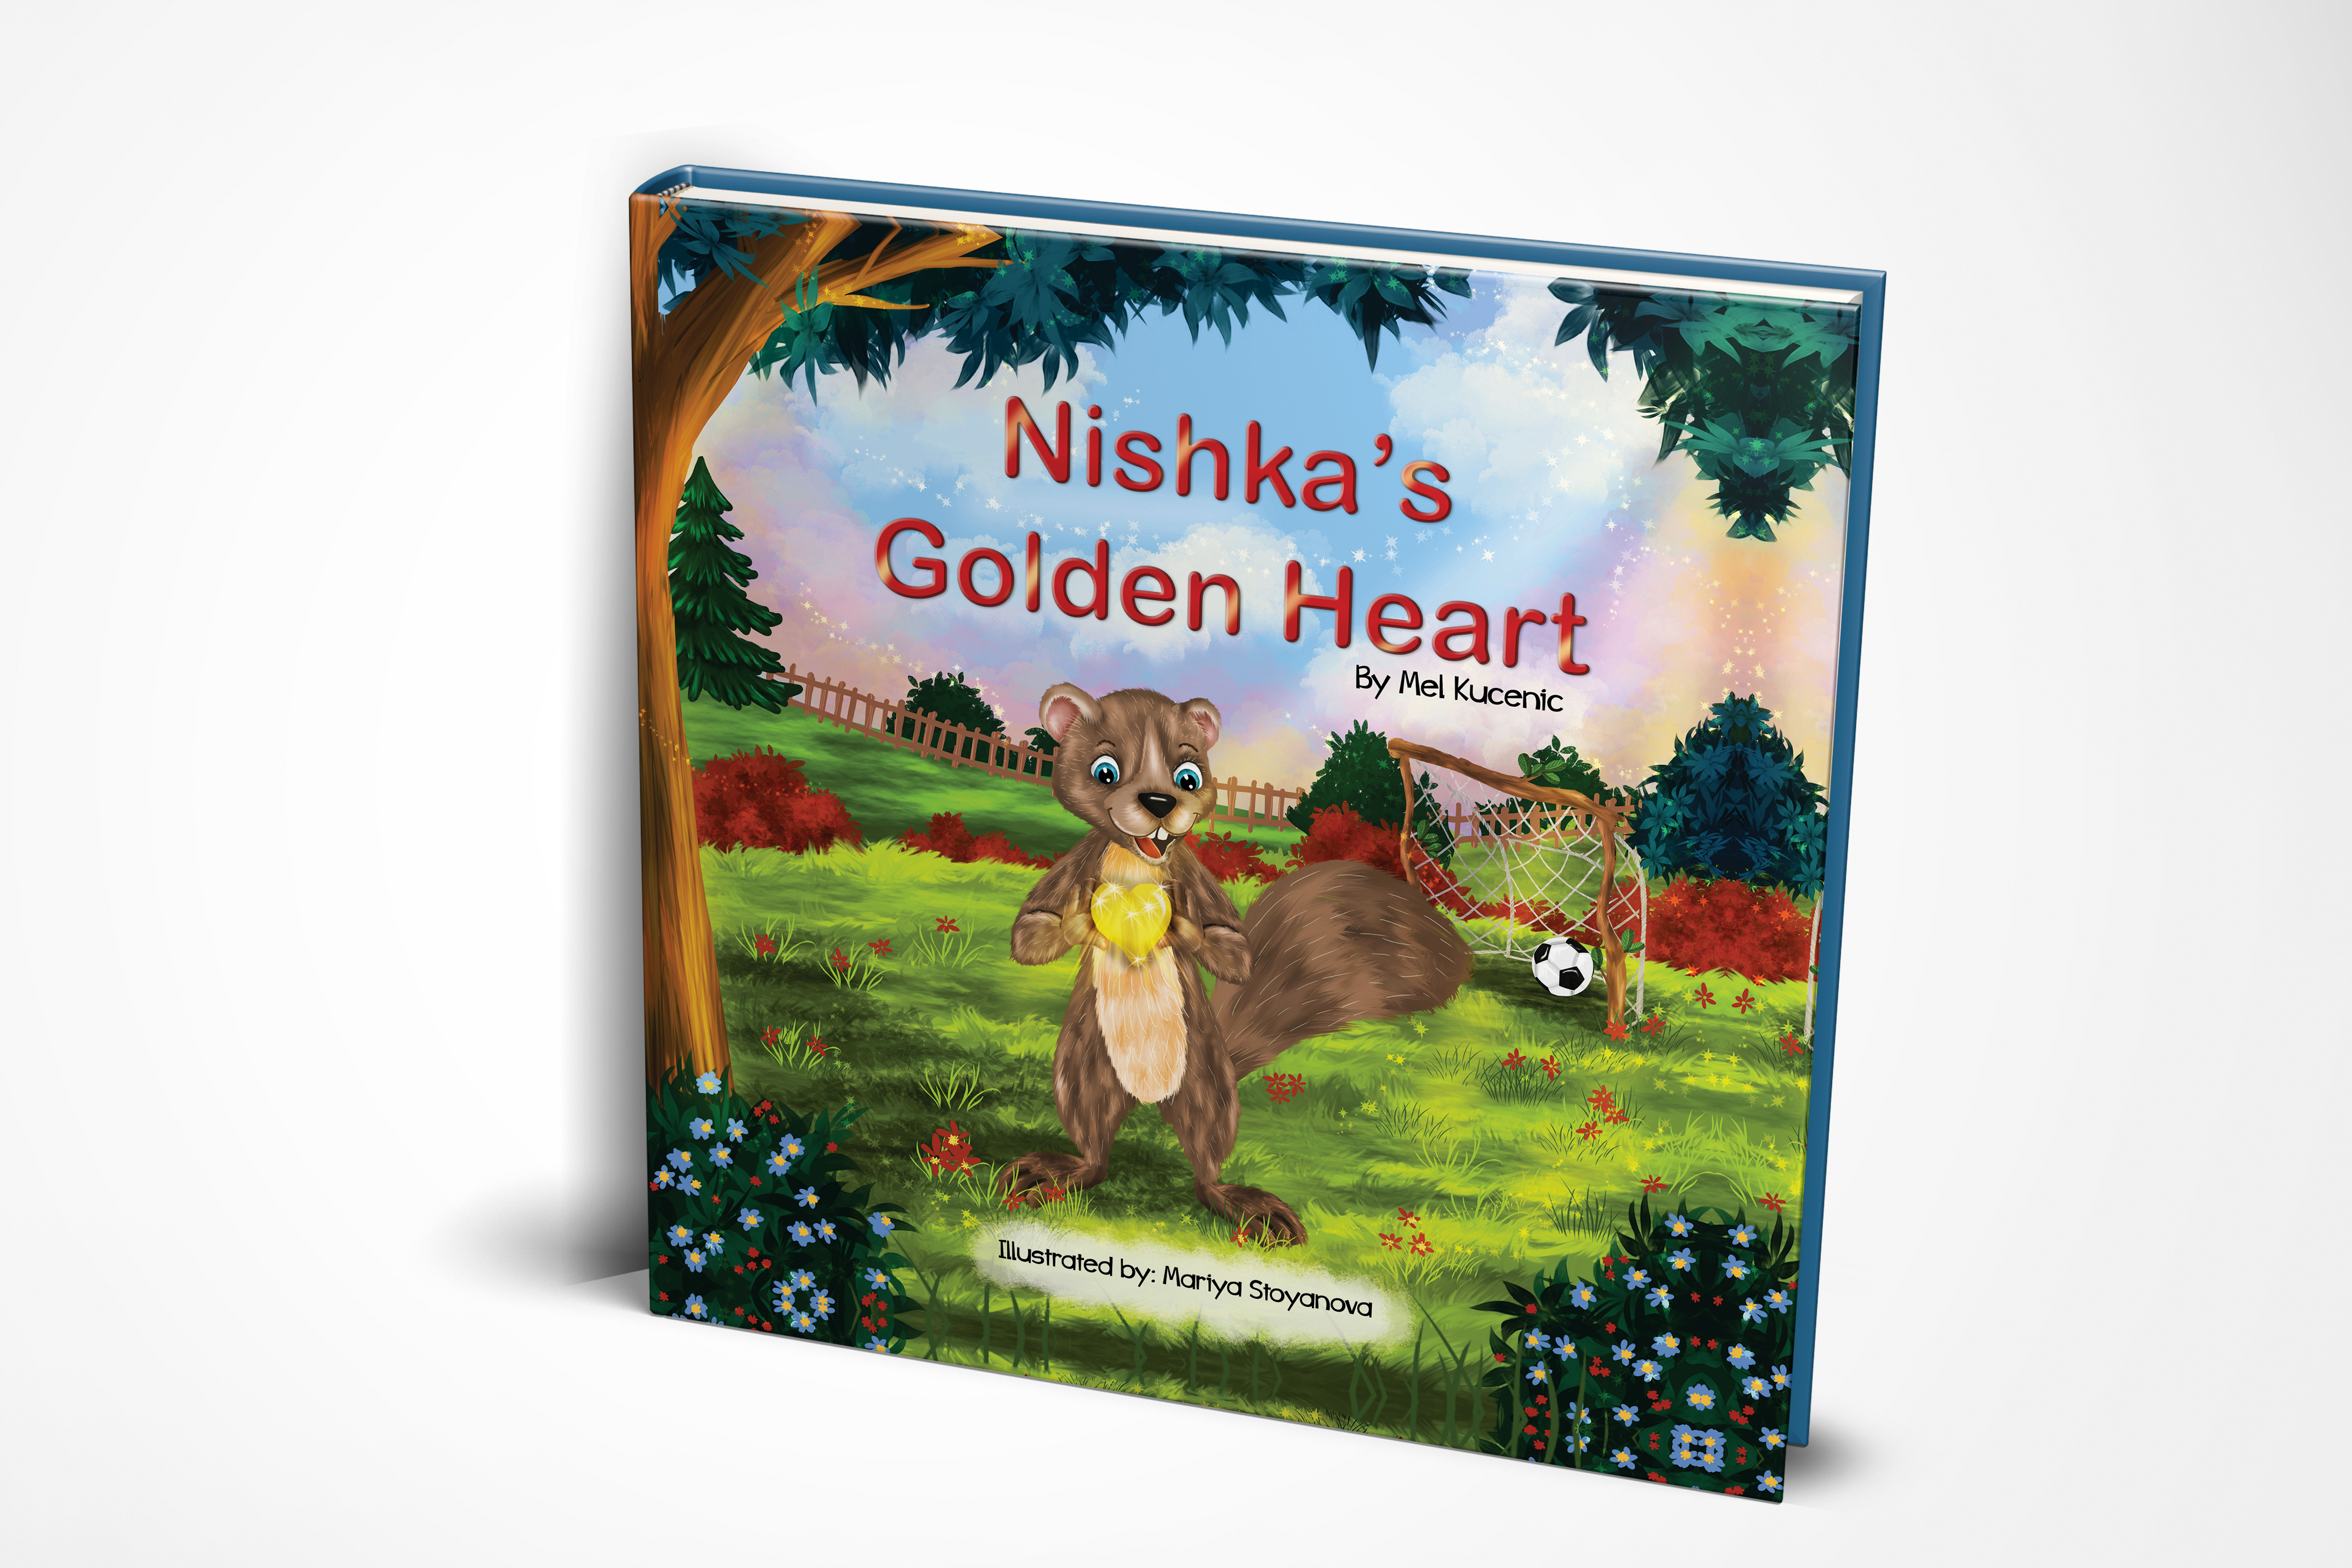 Nishka's Golden Heart